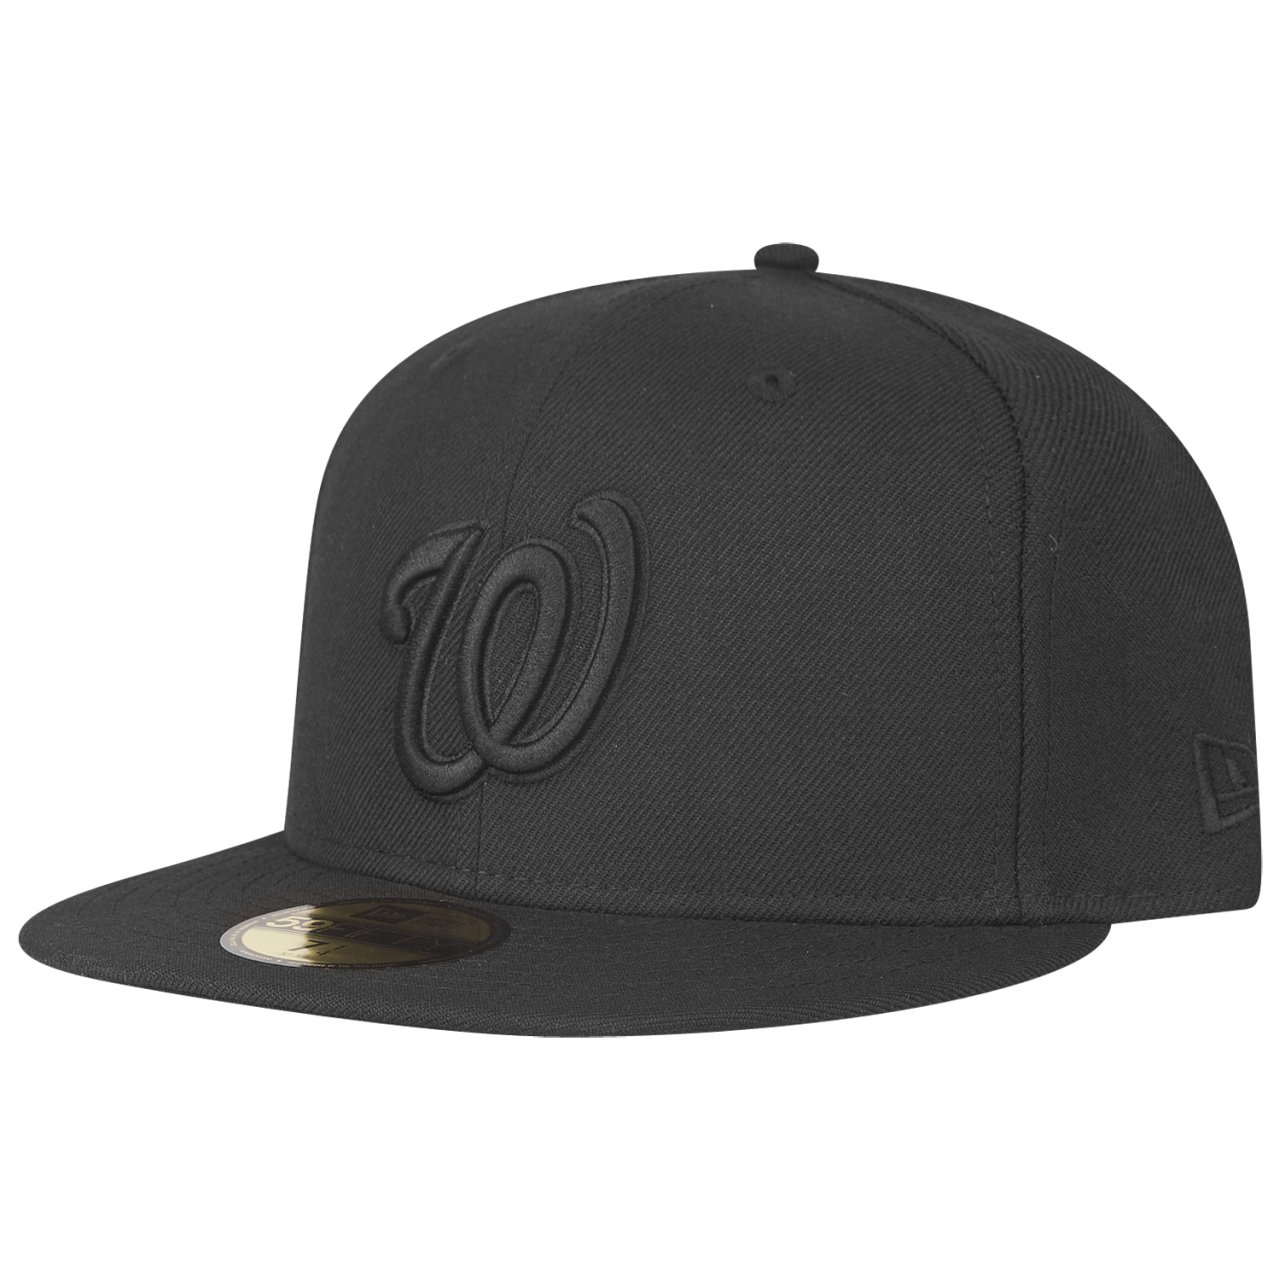 New Era 59Fifty Cap - MLB BLACK Washington Nationals | Fitted | Caps ...